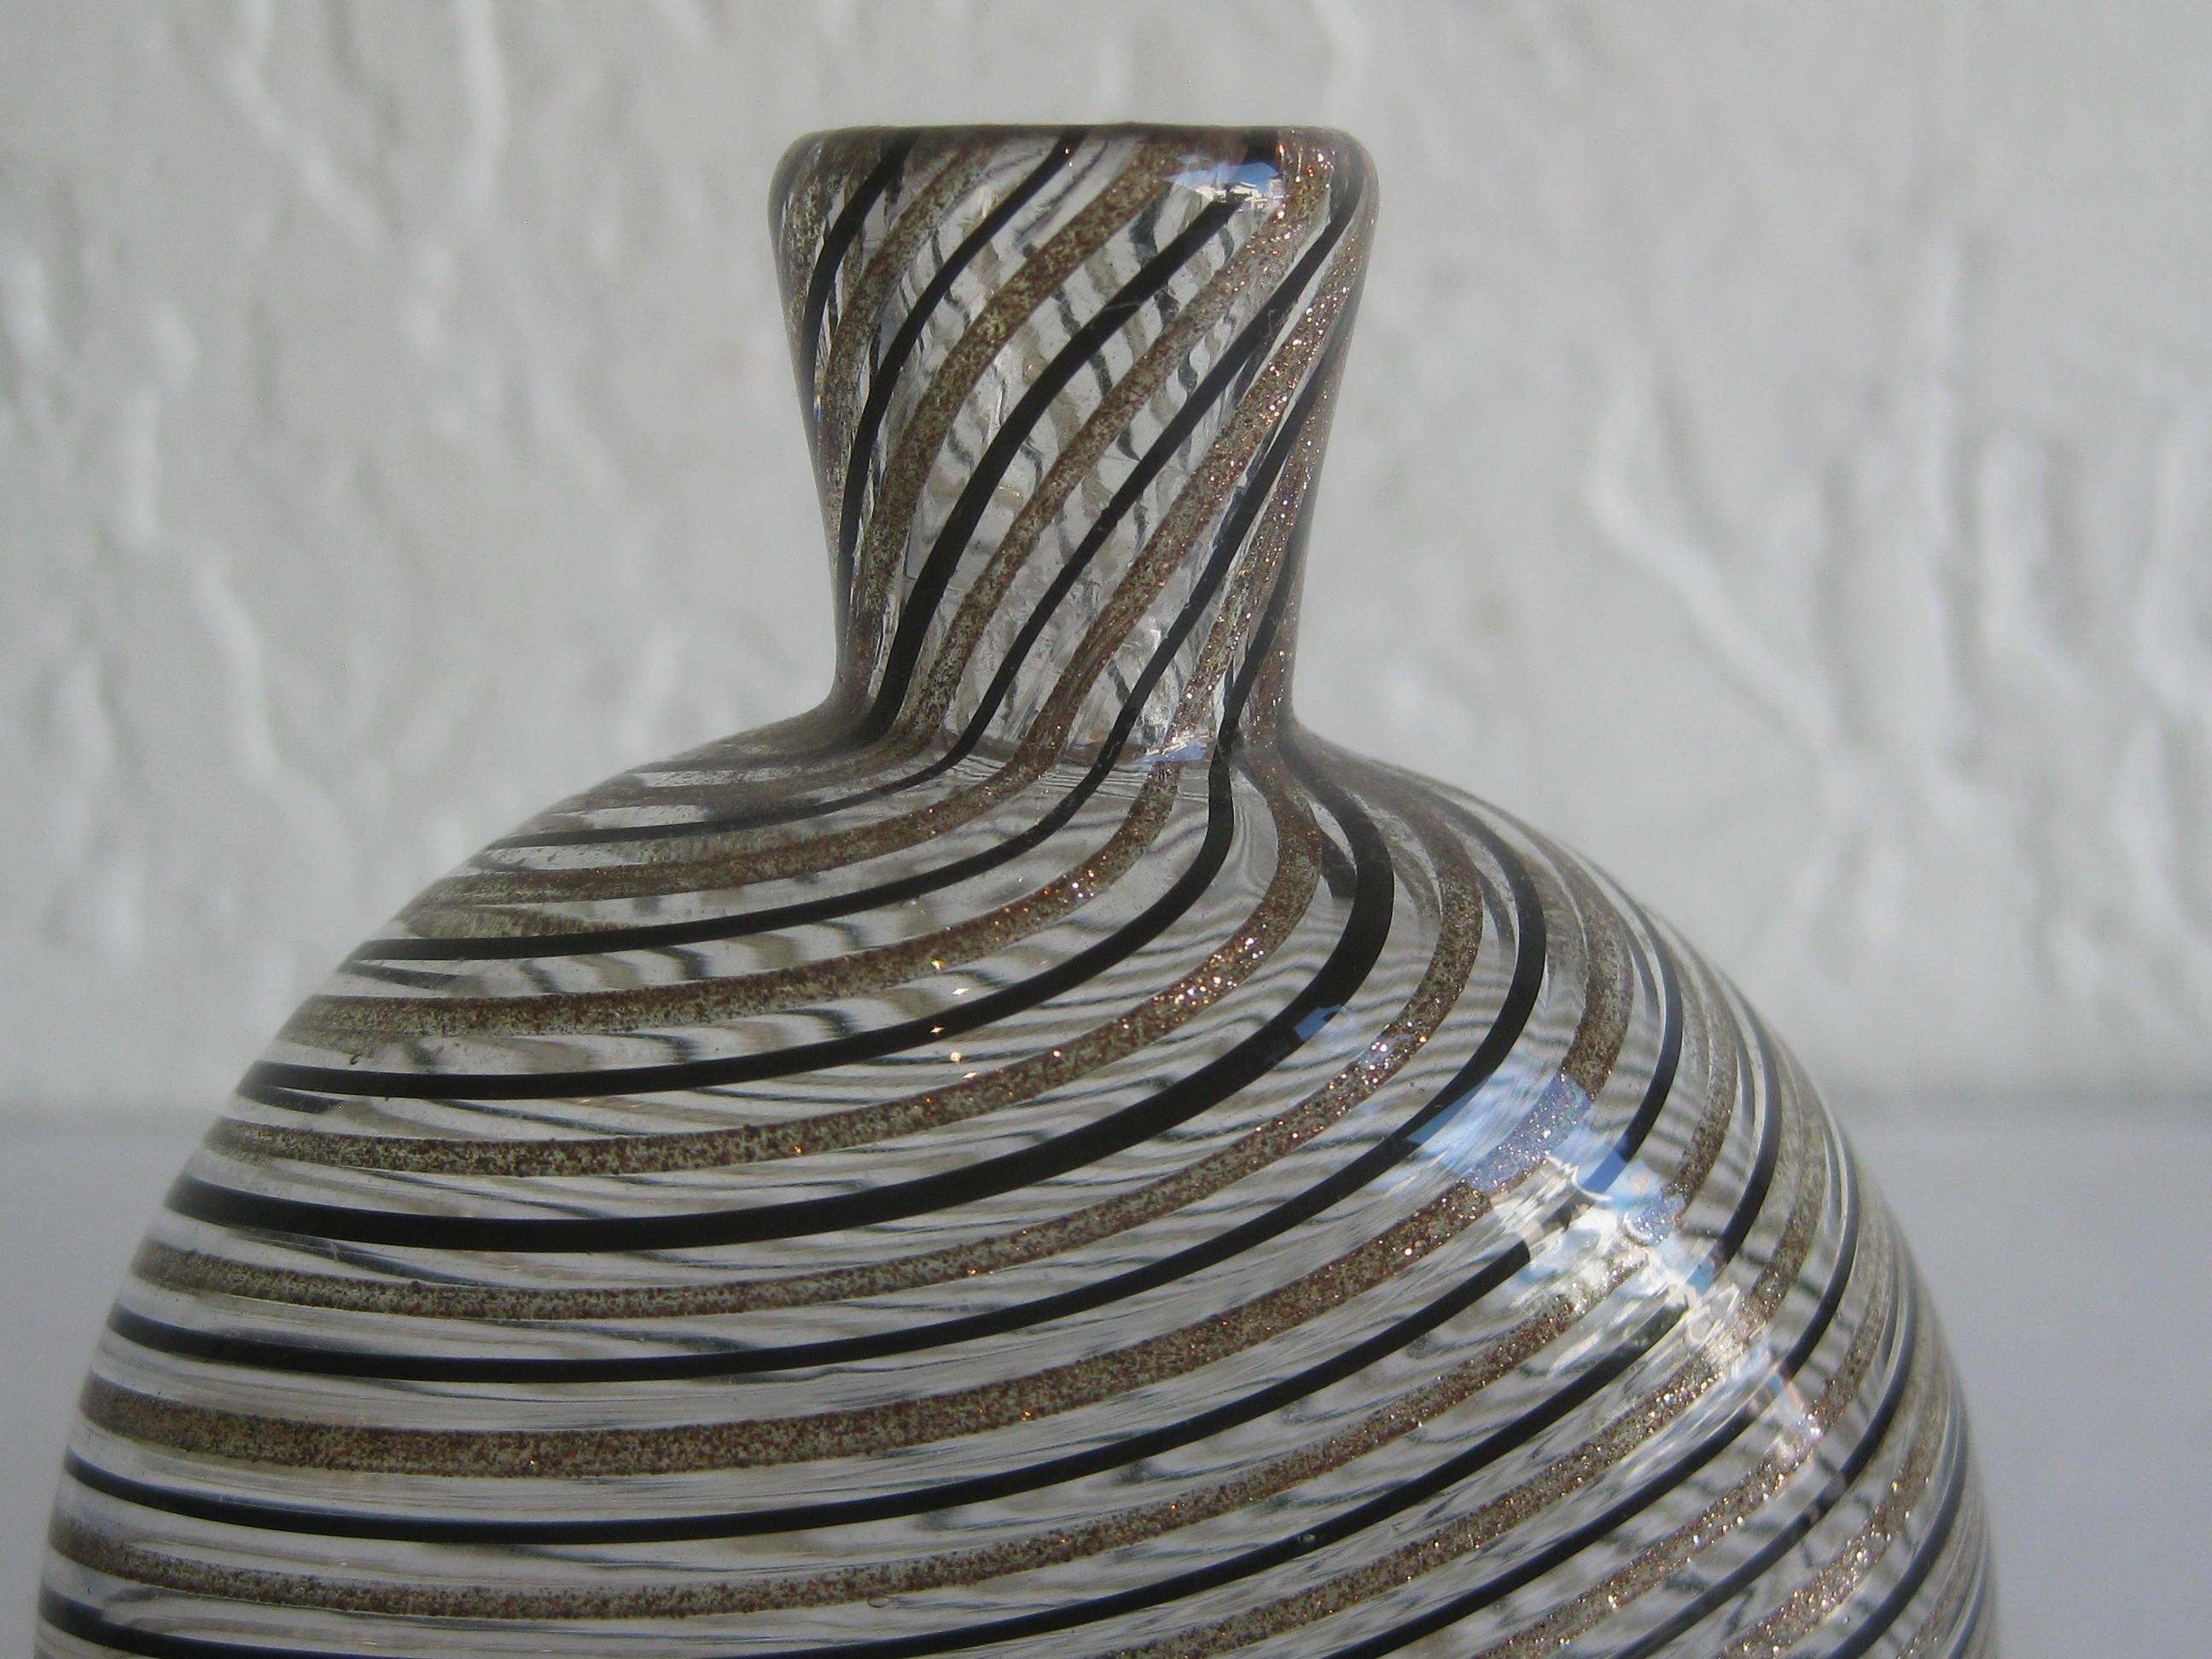 Dino Martens Mezza Filigrana Gold and Black Canes Murano Art Glass Vase, Italy 2